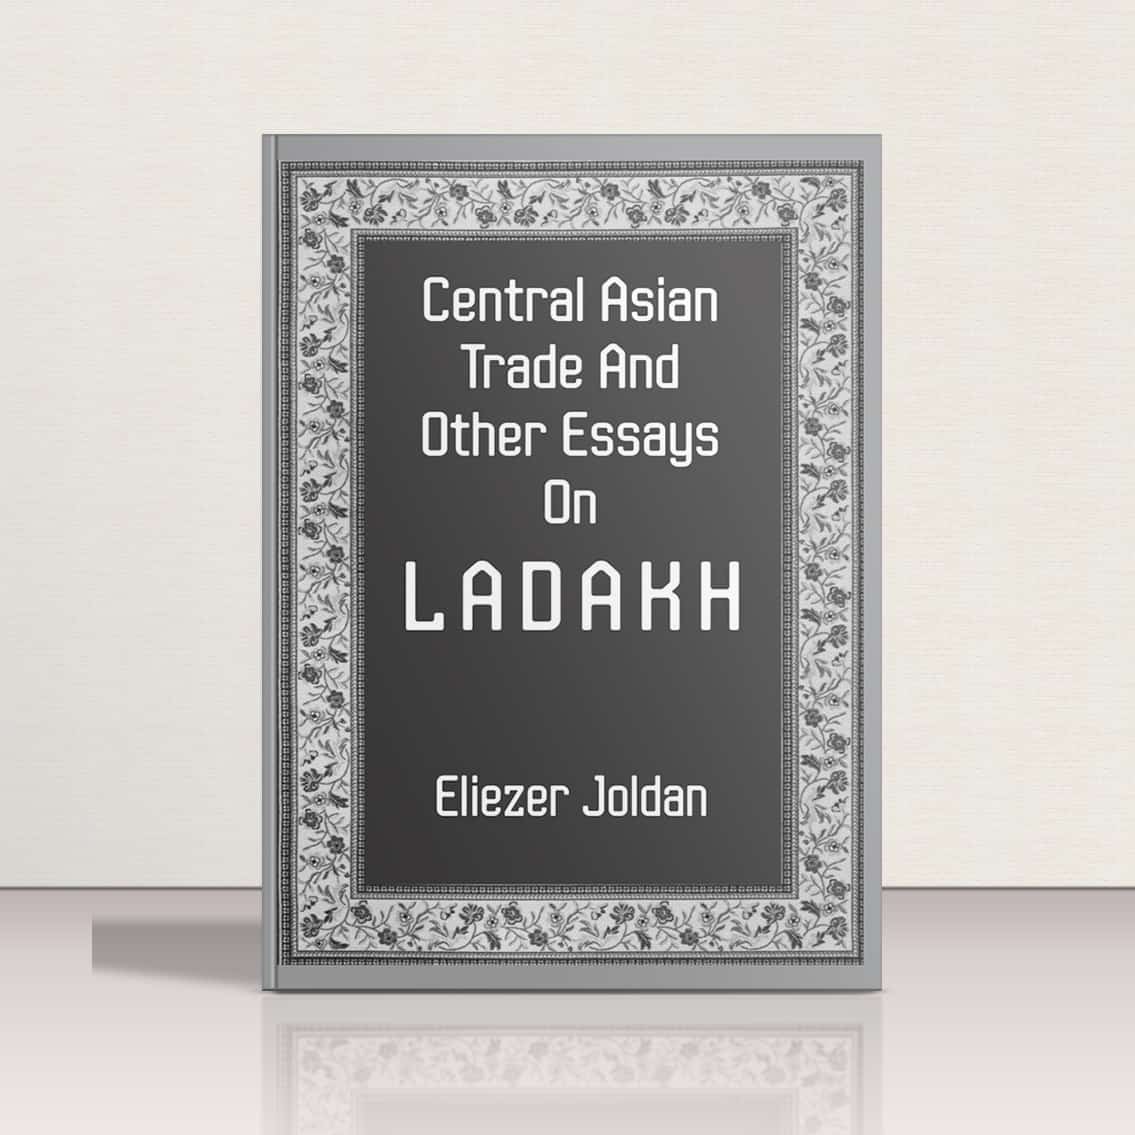 Central Asian Trade & Other Essays on Ladakh by Eliezer Joldan